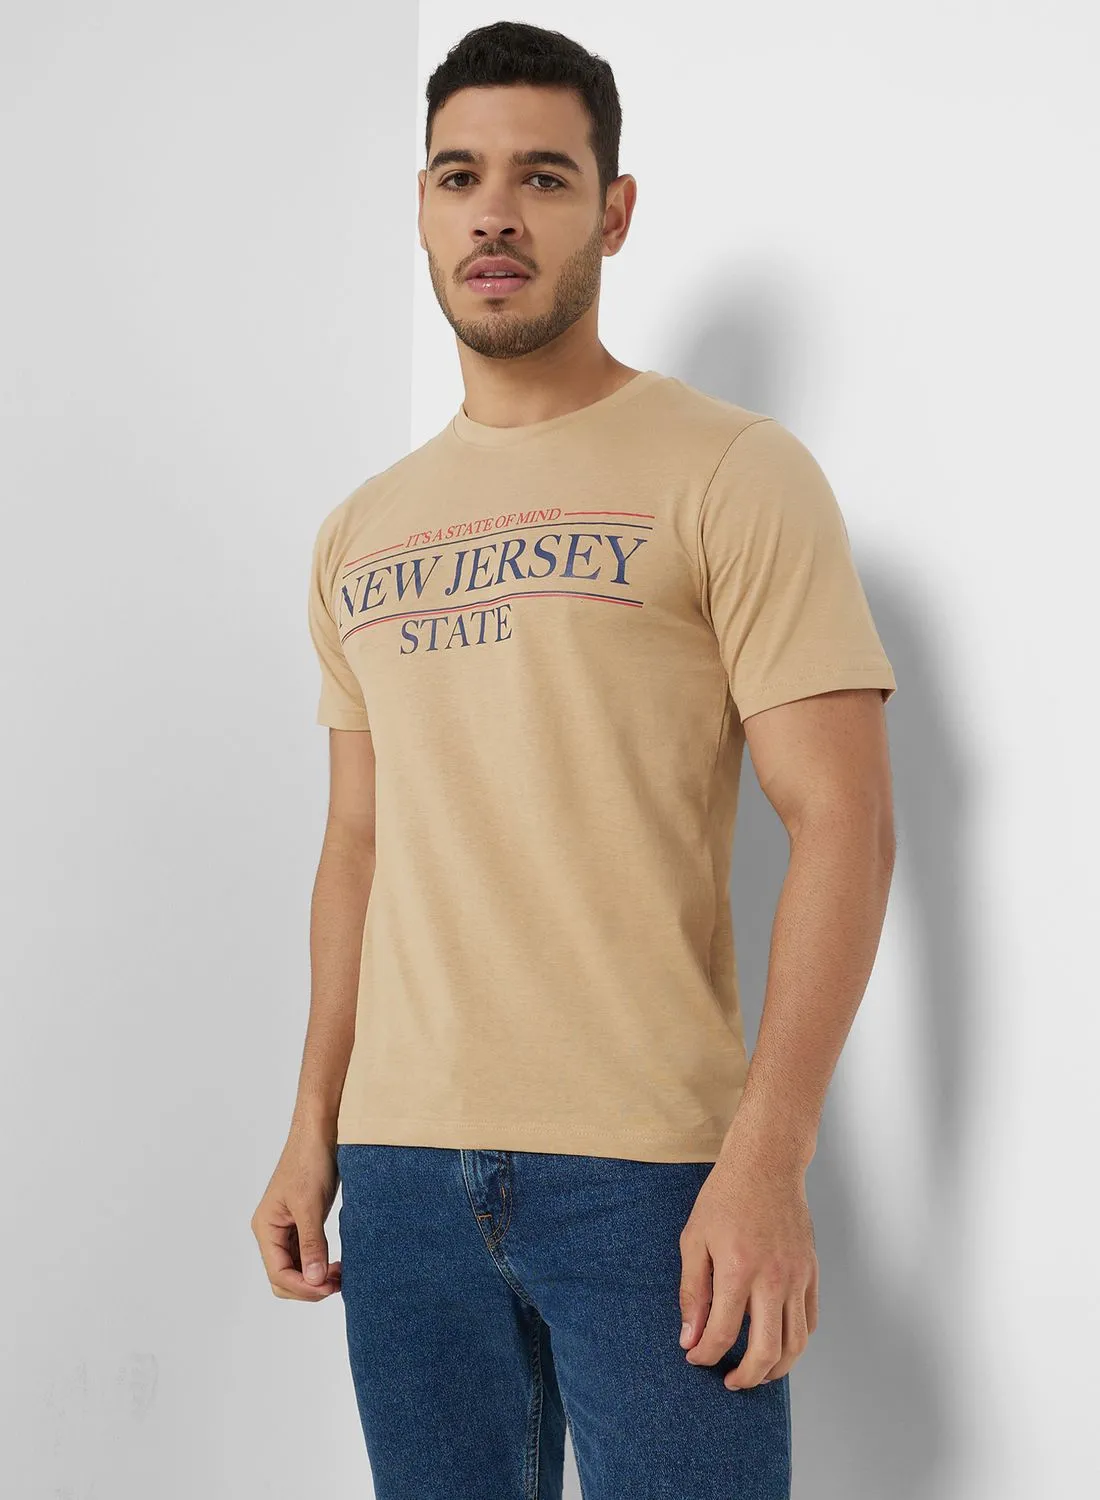 Seventy Five New Jersey State T Shirt